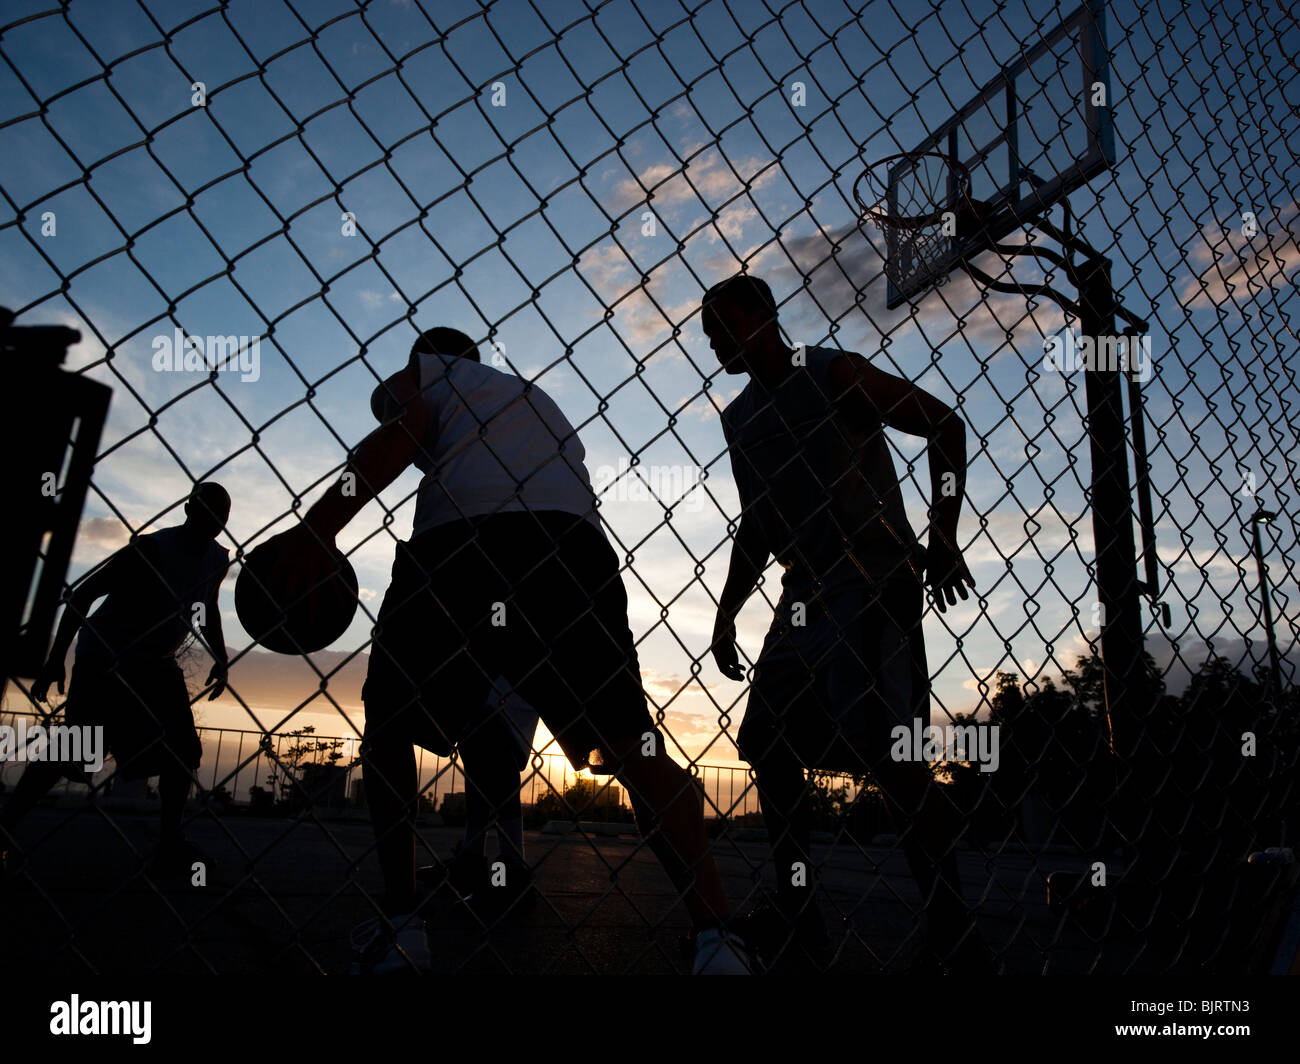 USA, Utah, Salt Lake City, vier junge Männer spielen street-Basketball, niedrigen Winkel Ansicht Stockfoto